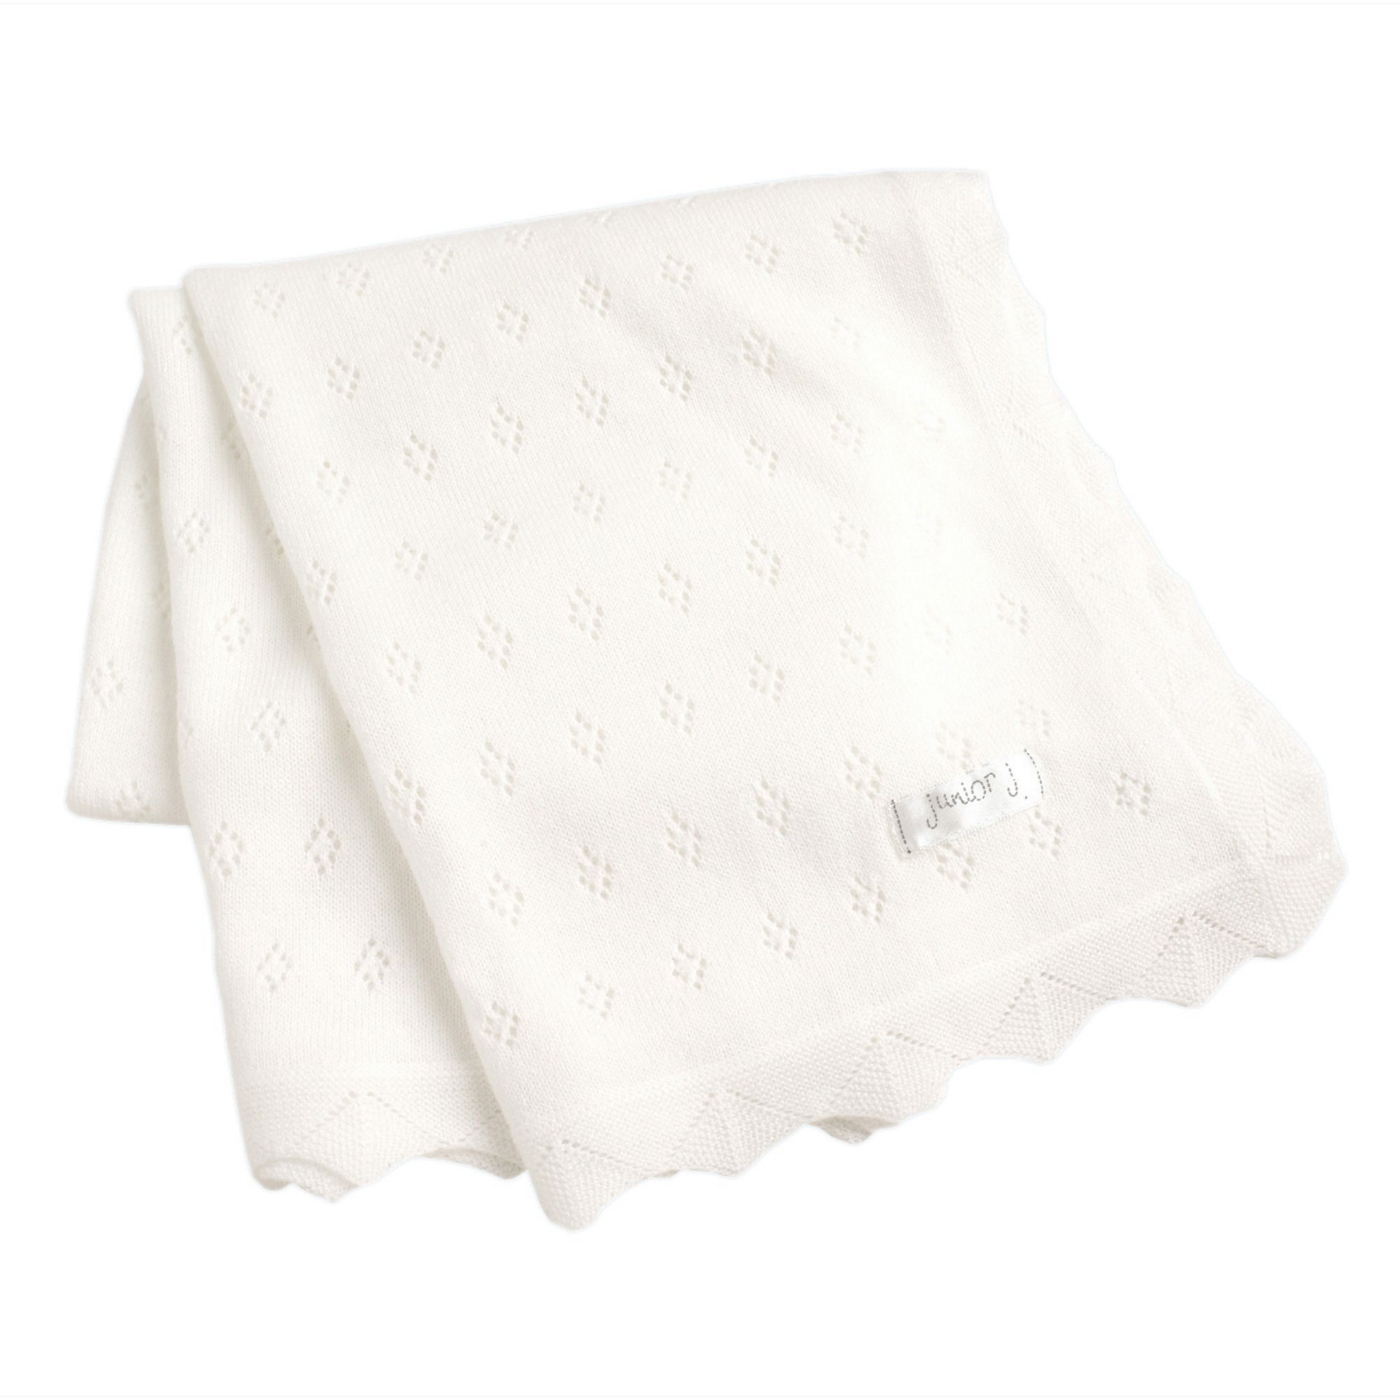 J by Jasper Conran Designer Babies white knitted blanket